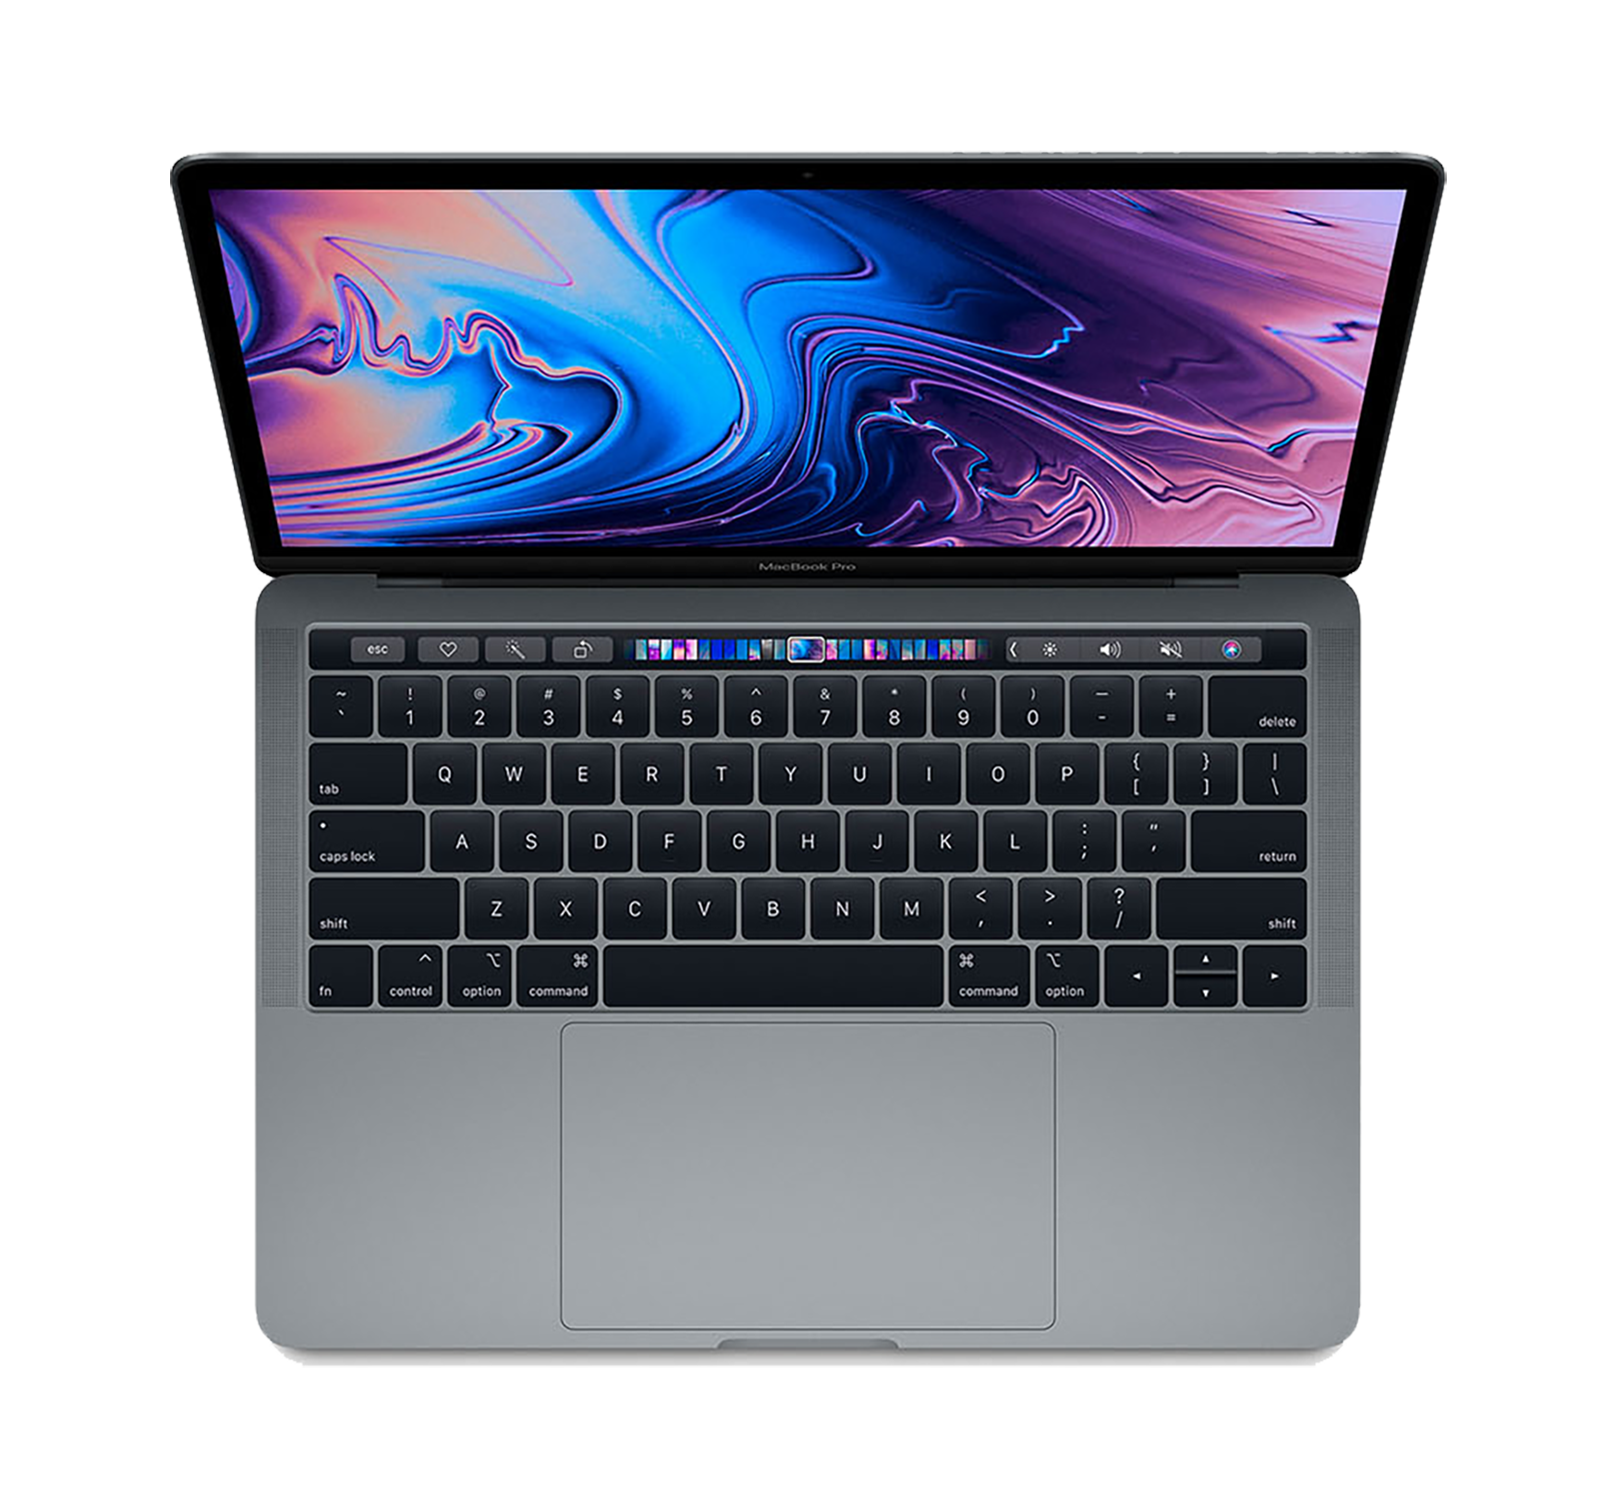 Macbook Pro 2019 Price Sale, 53% OFF | www.ingeniovirtual.com